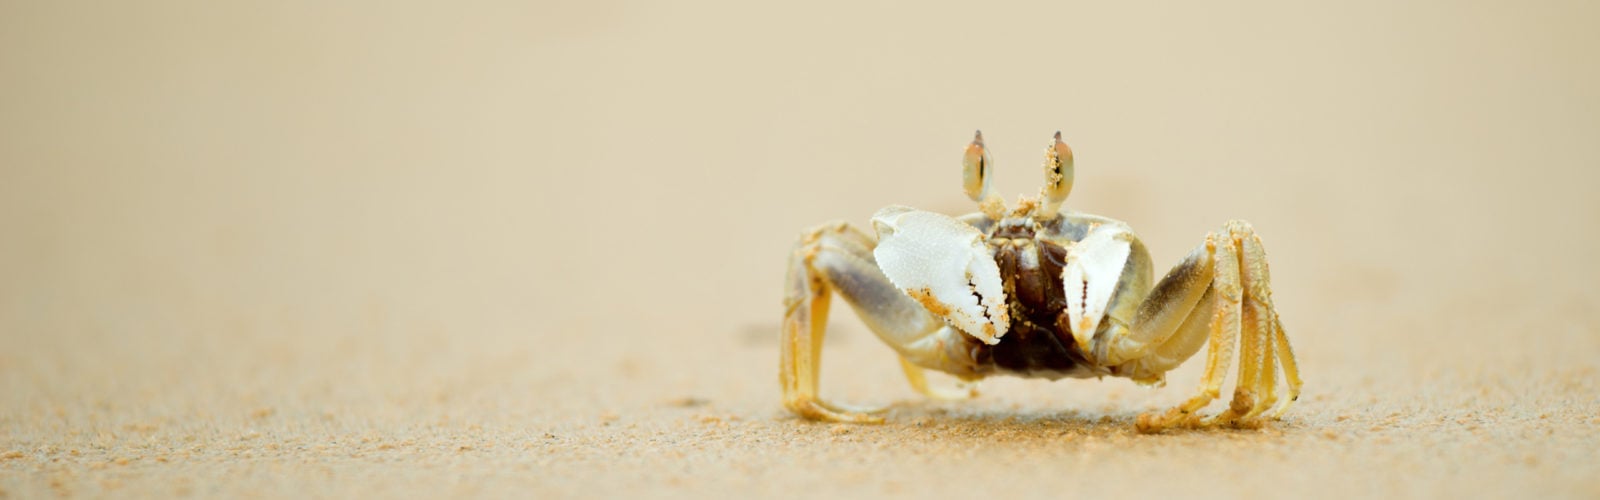 crab-on-the-beach-con-dao